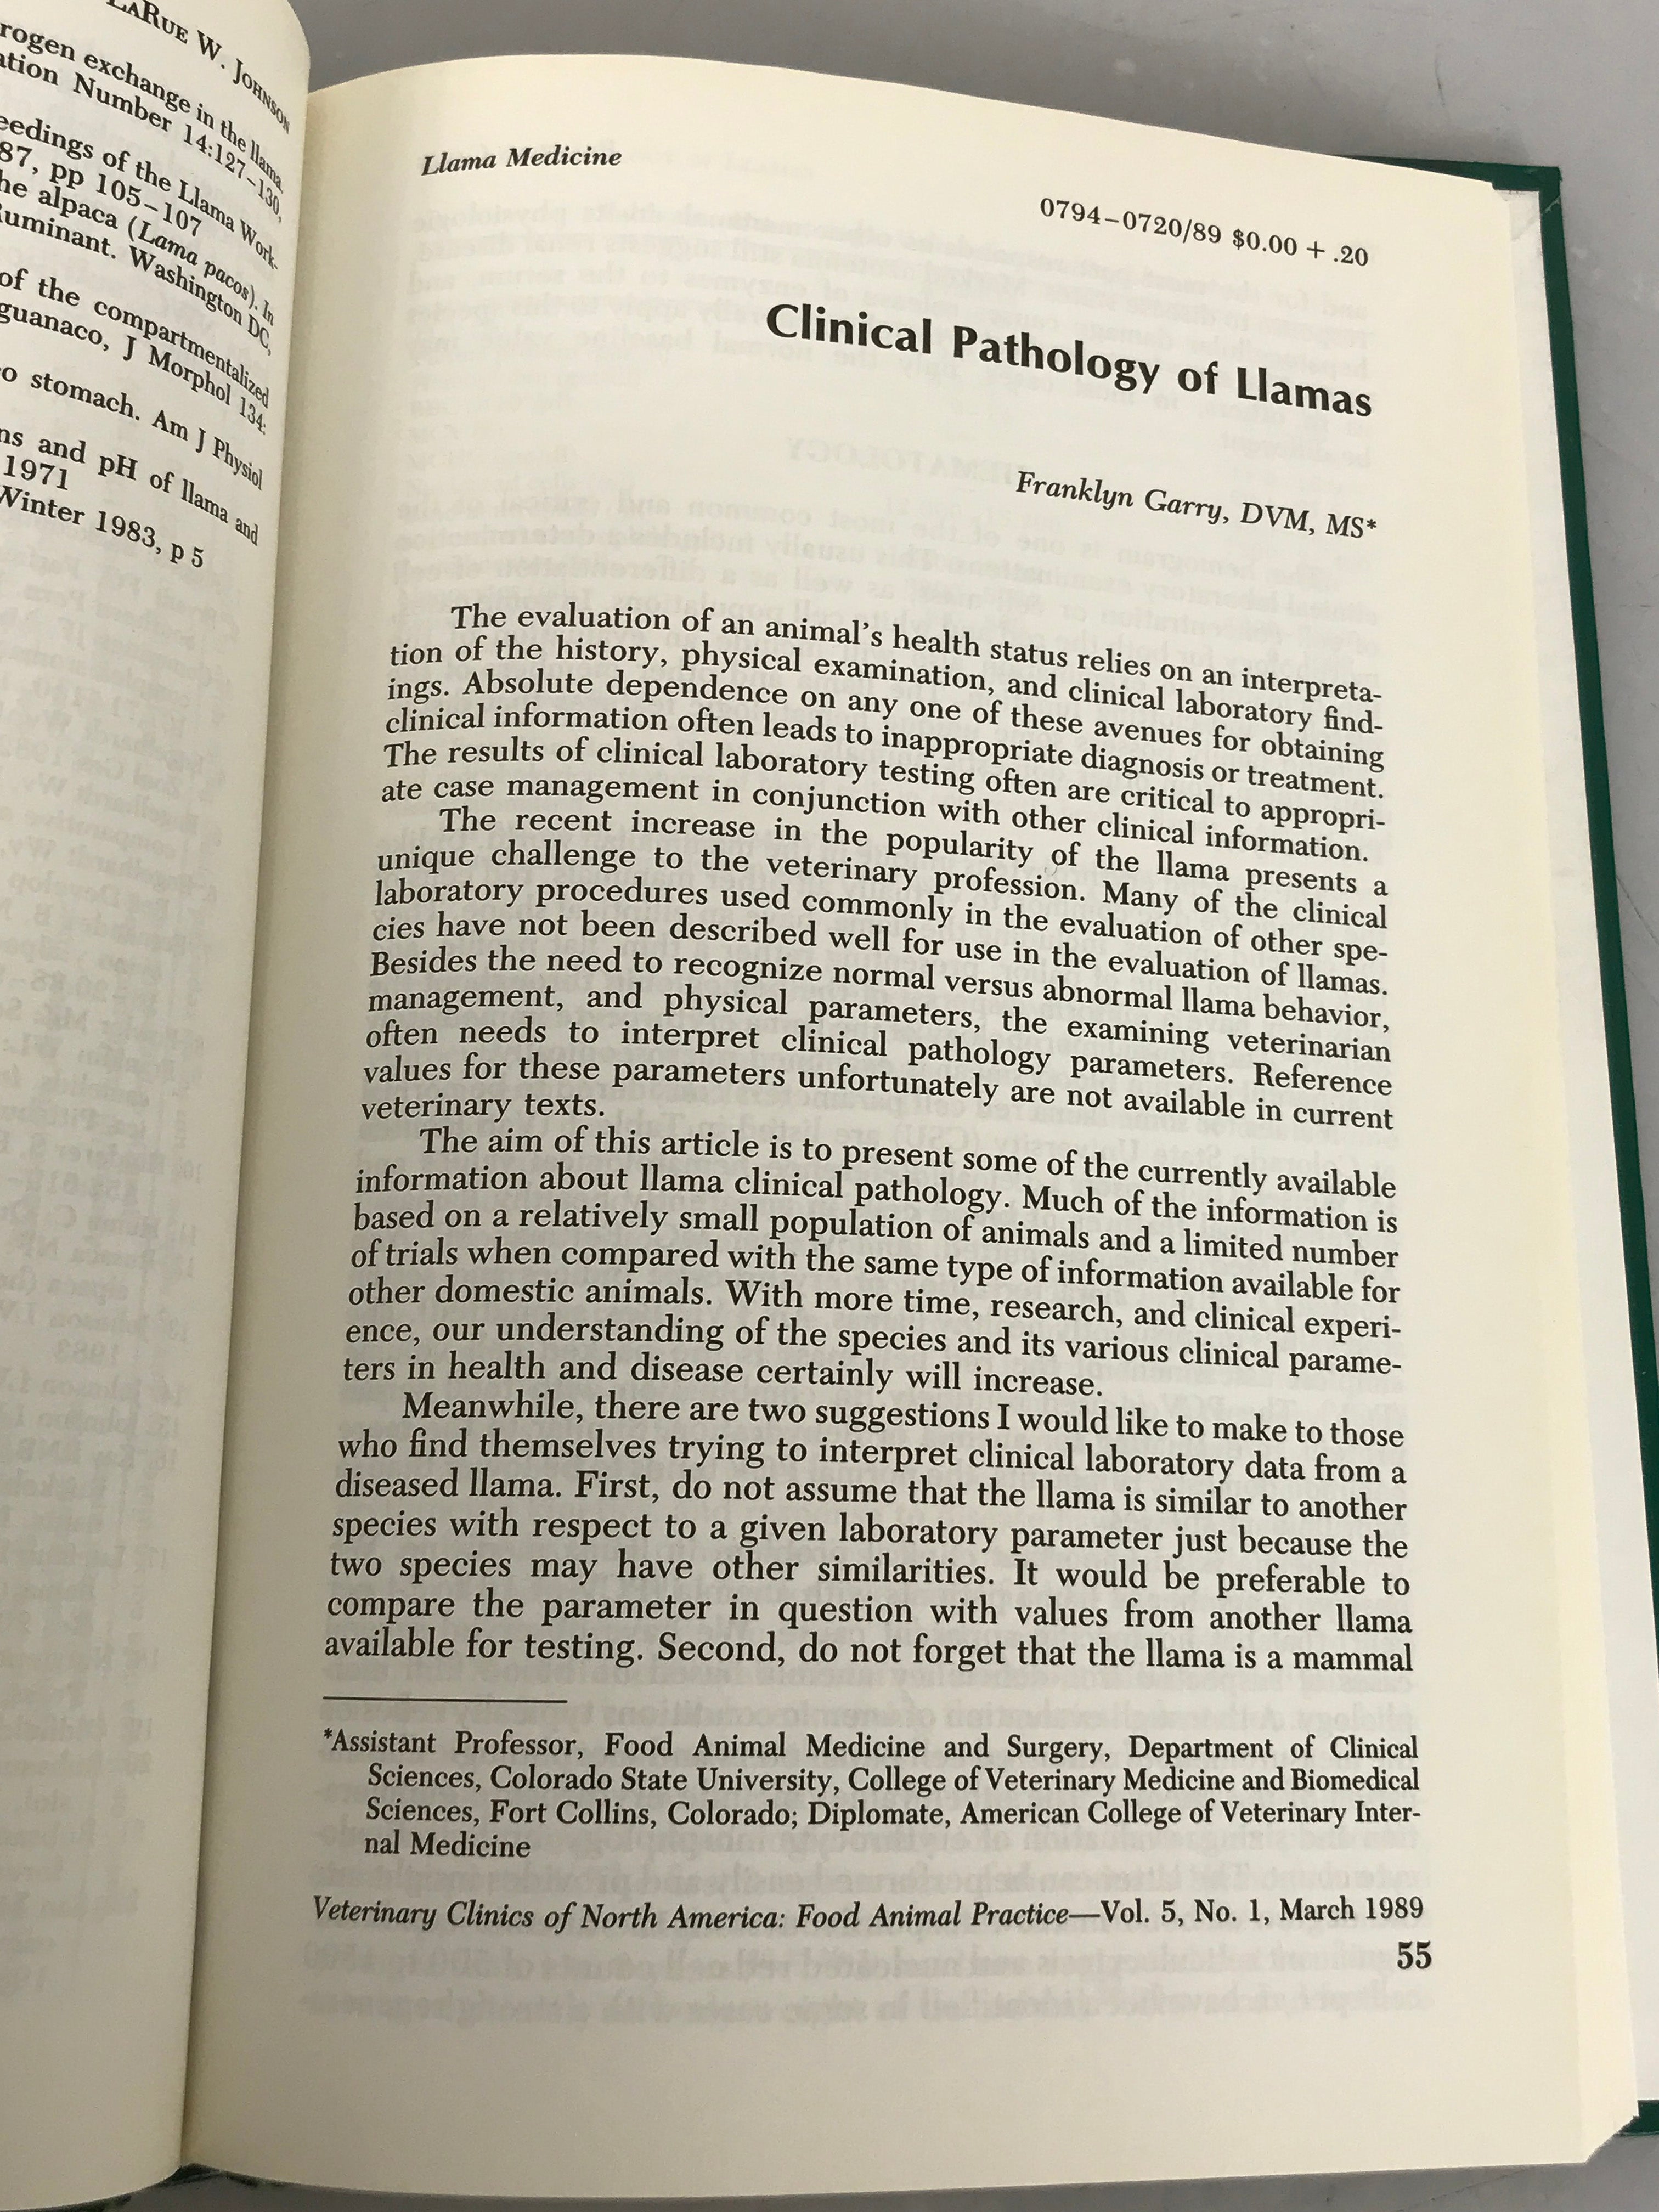 Llama Medicine from the Veterinary Clinics of North America March 1989 HC